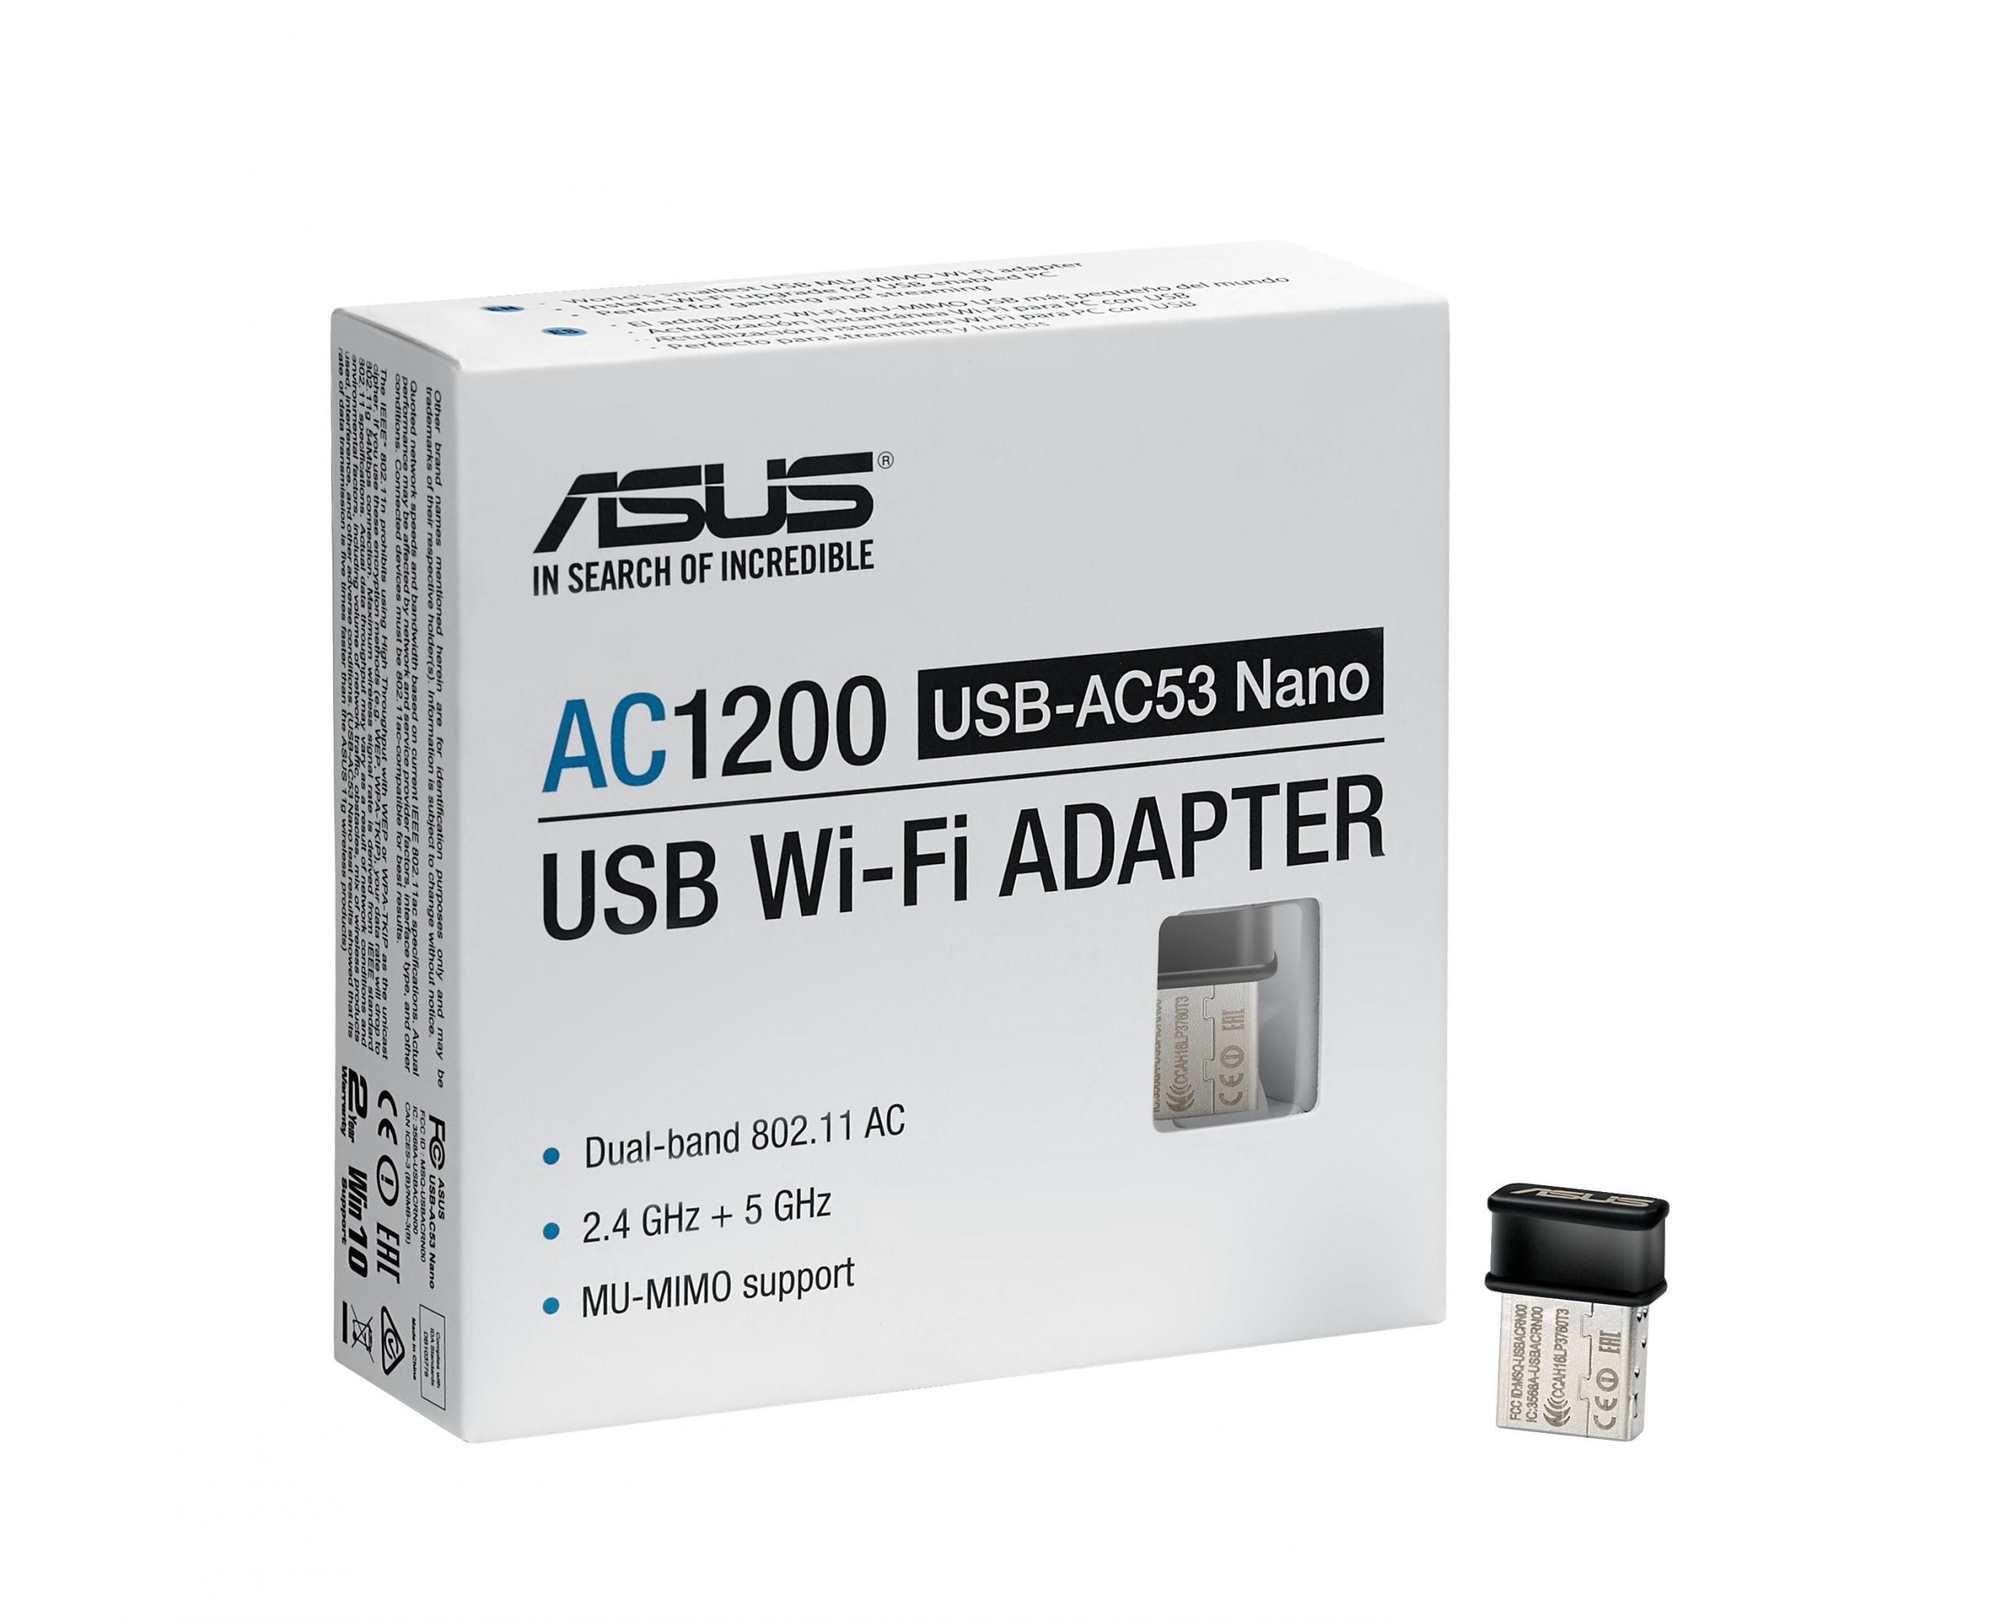 ASUS USB-AC53 Nano AC1200 Dual-Band Wi-Fi USB Stick thumbnail 3